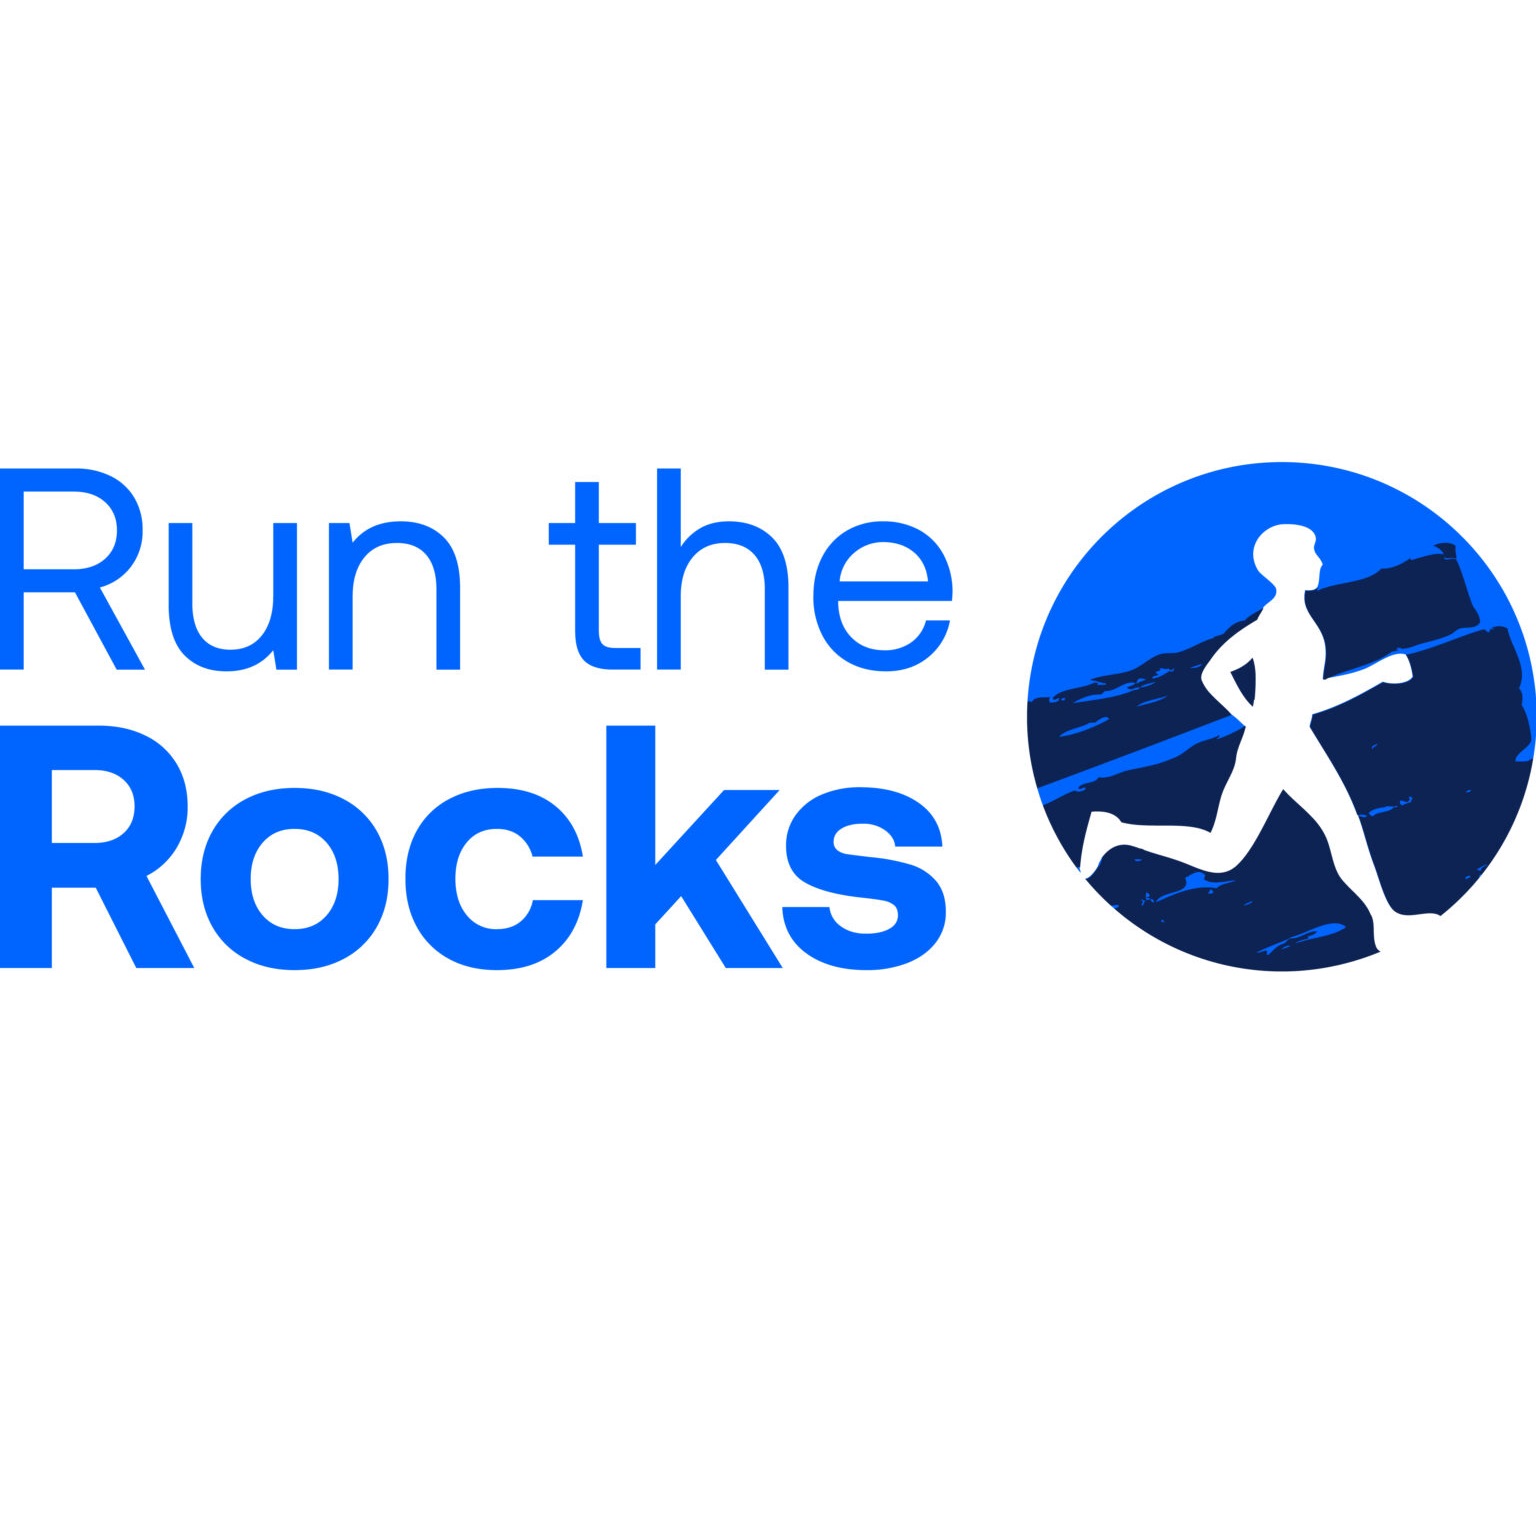 run-the-rocks-logo-1536x550